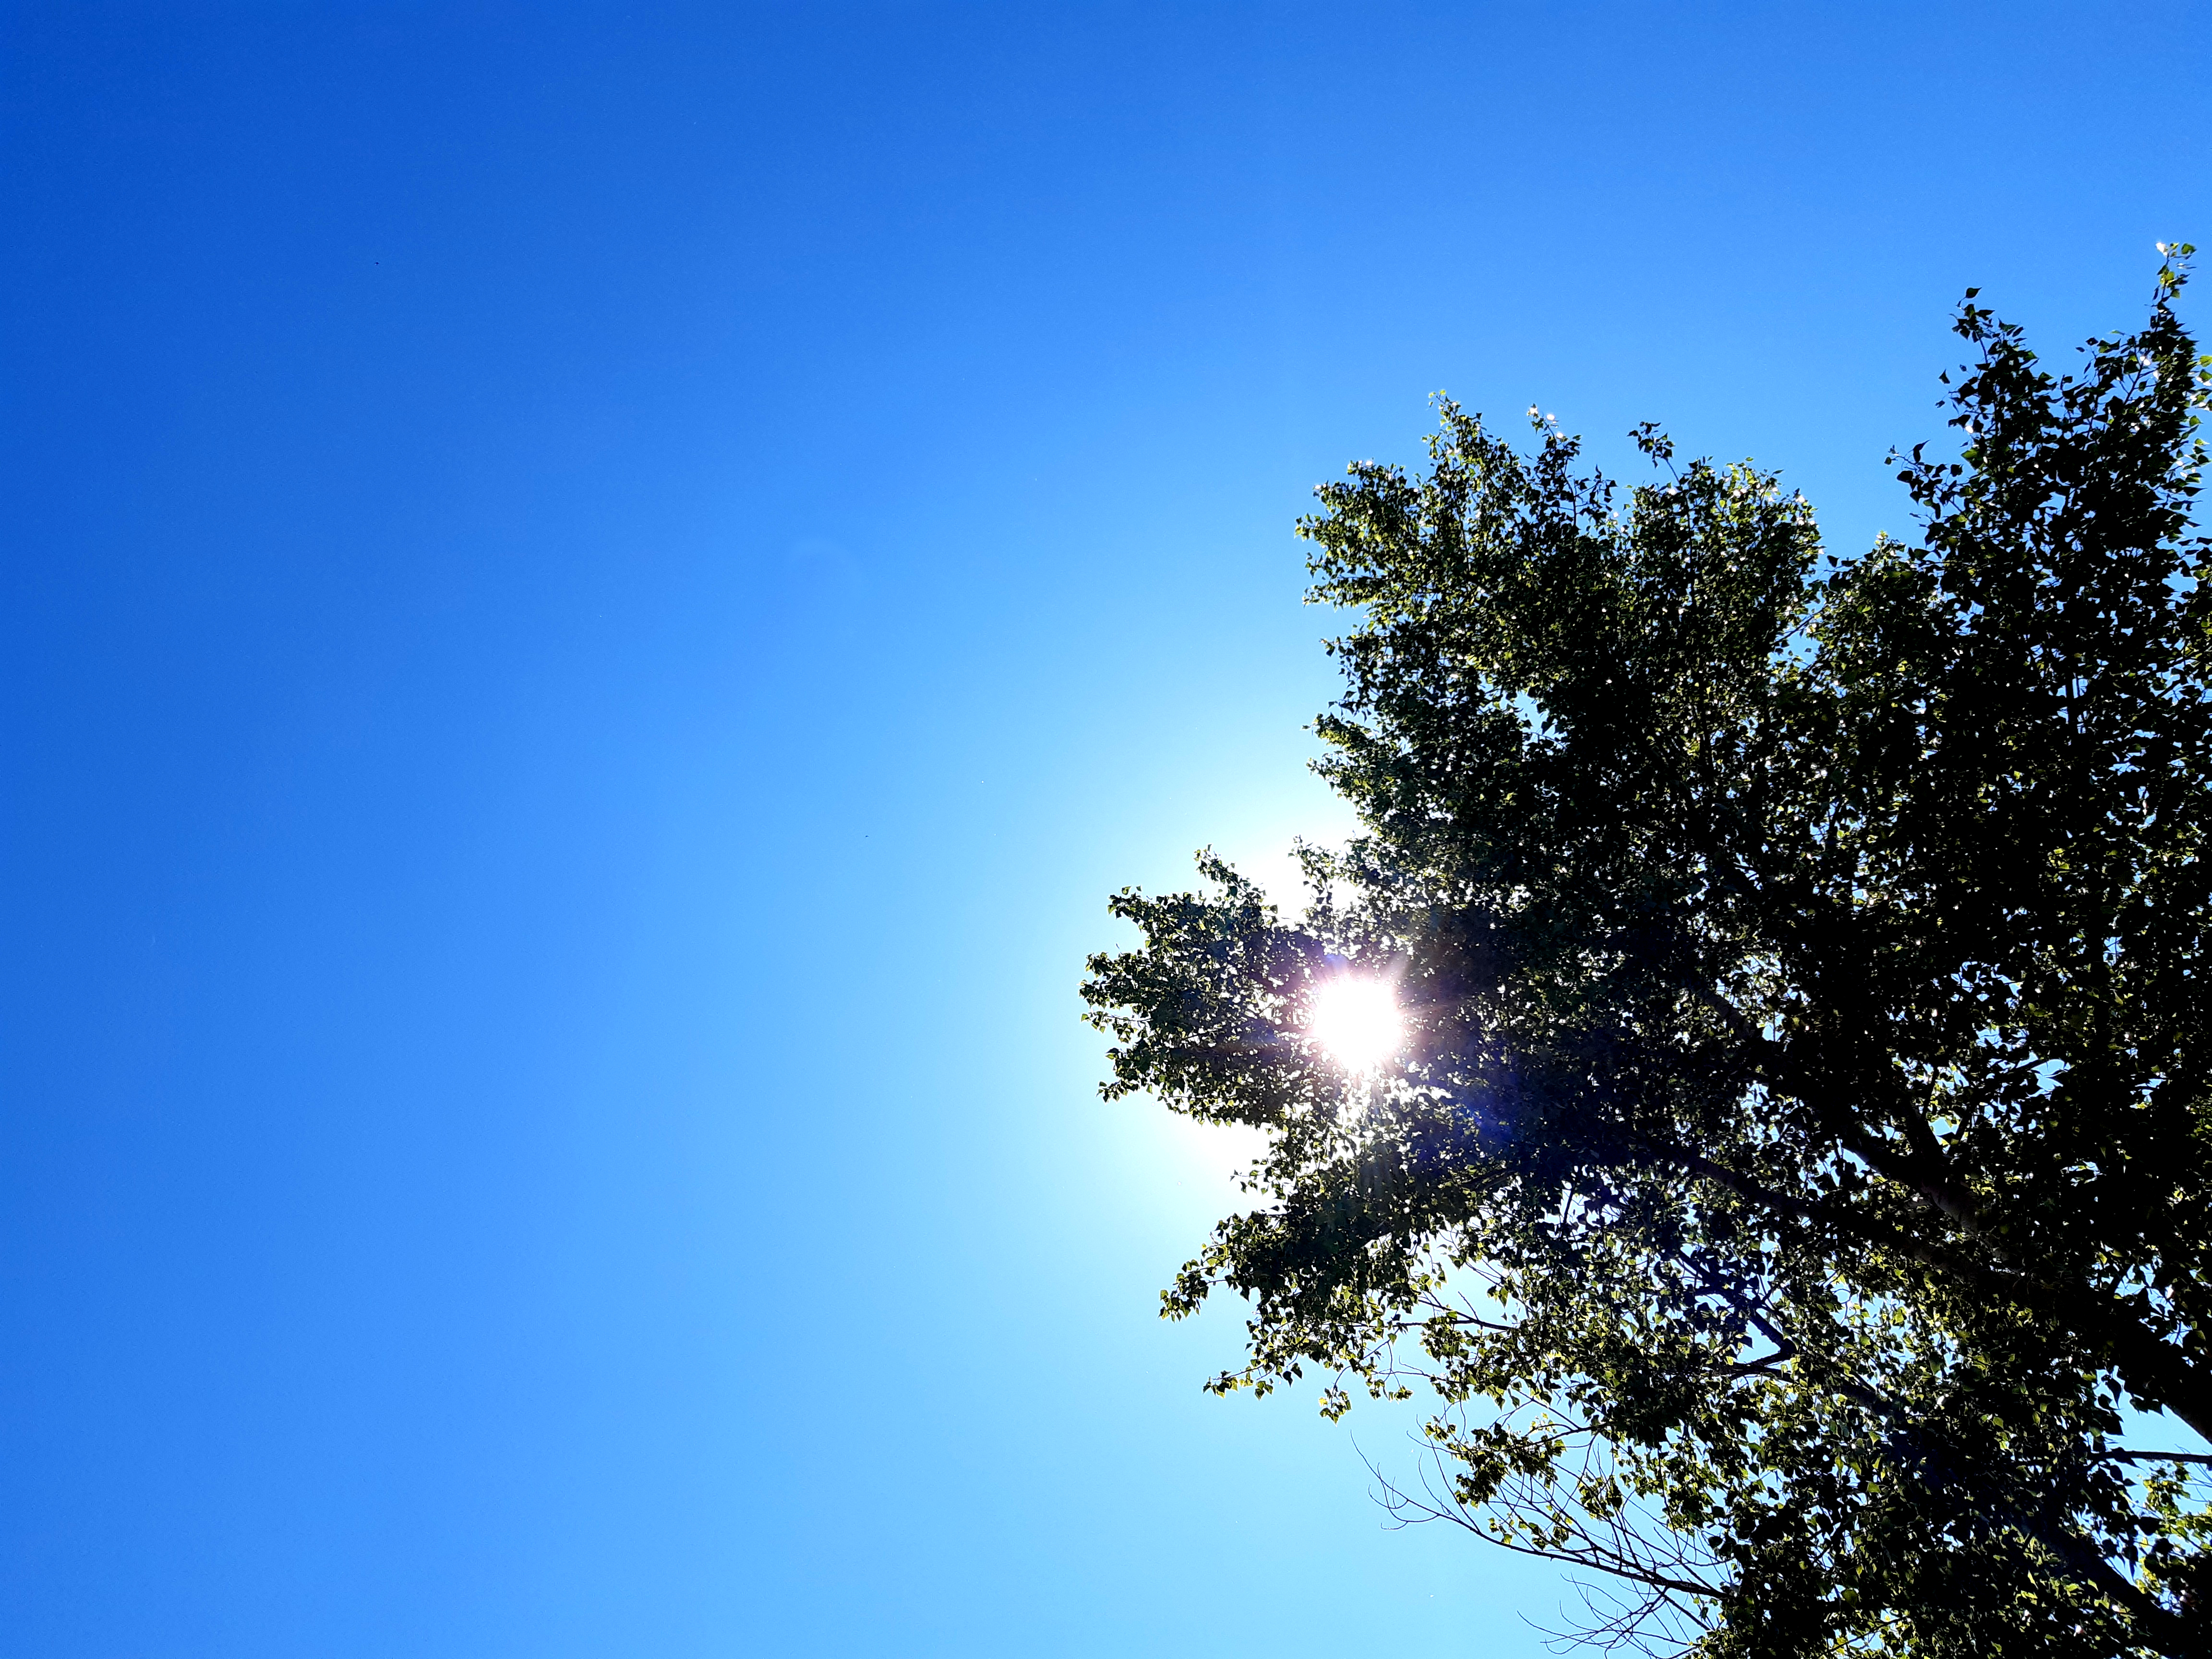 небо, голубое, крона дерева, лучи солнца, дерево, лето, листья, blue sky, tree crown, sun rays, tree, summer, leaves